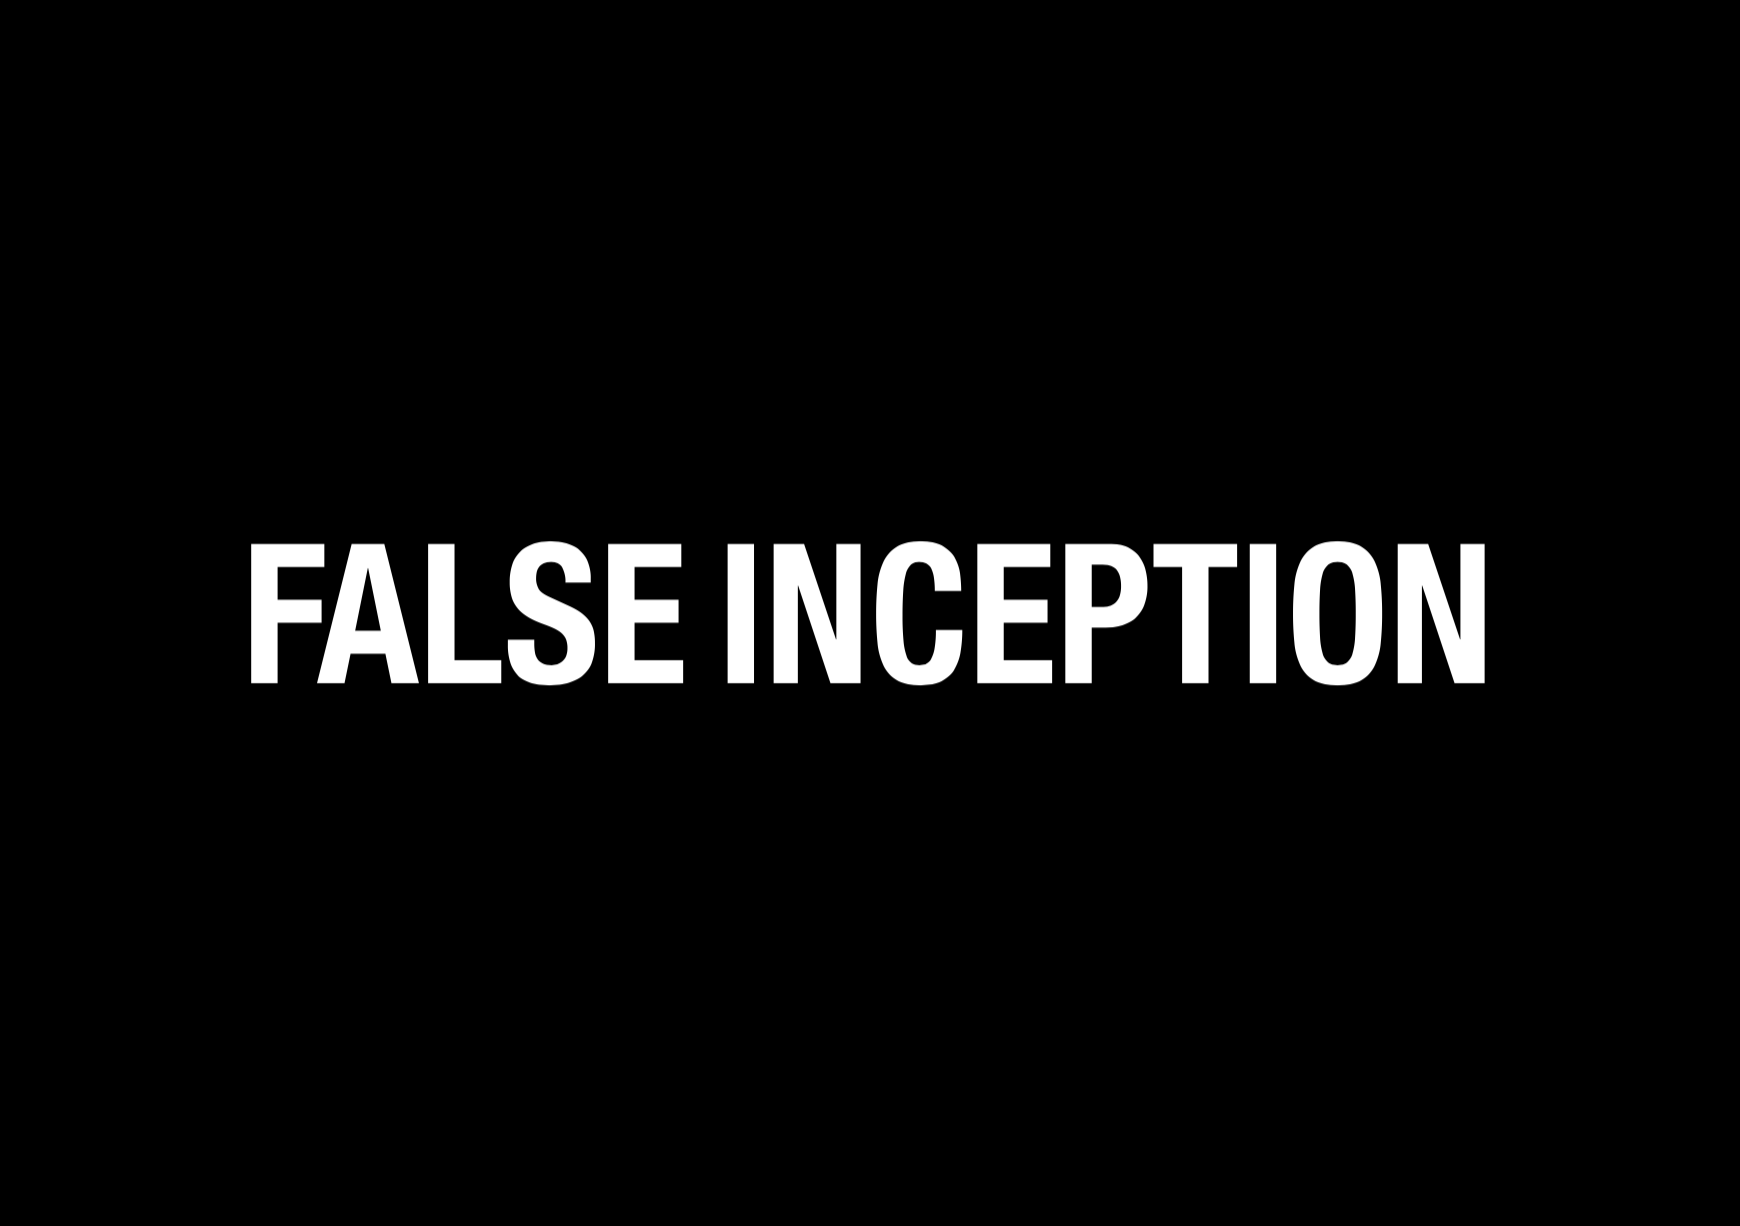 FALSE INCEPTION